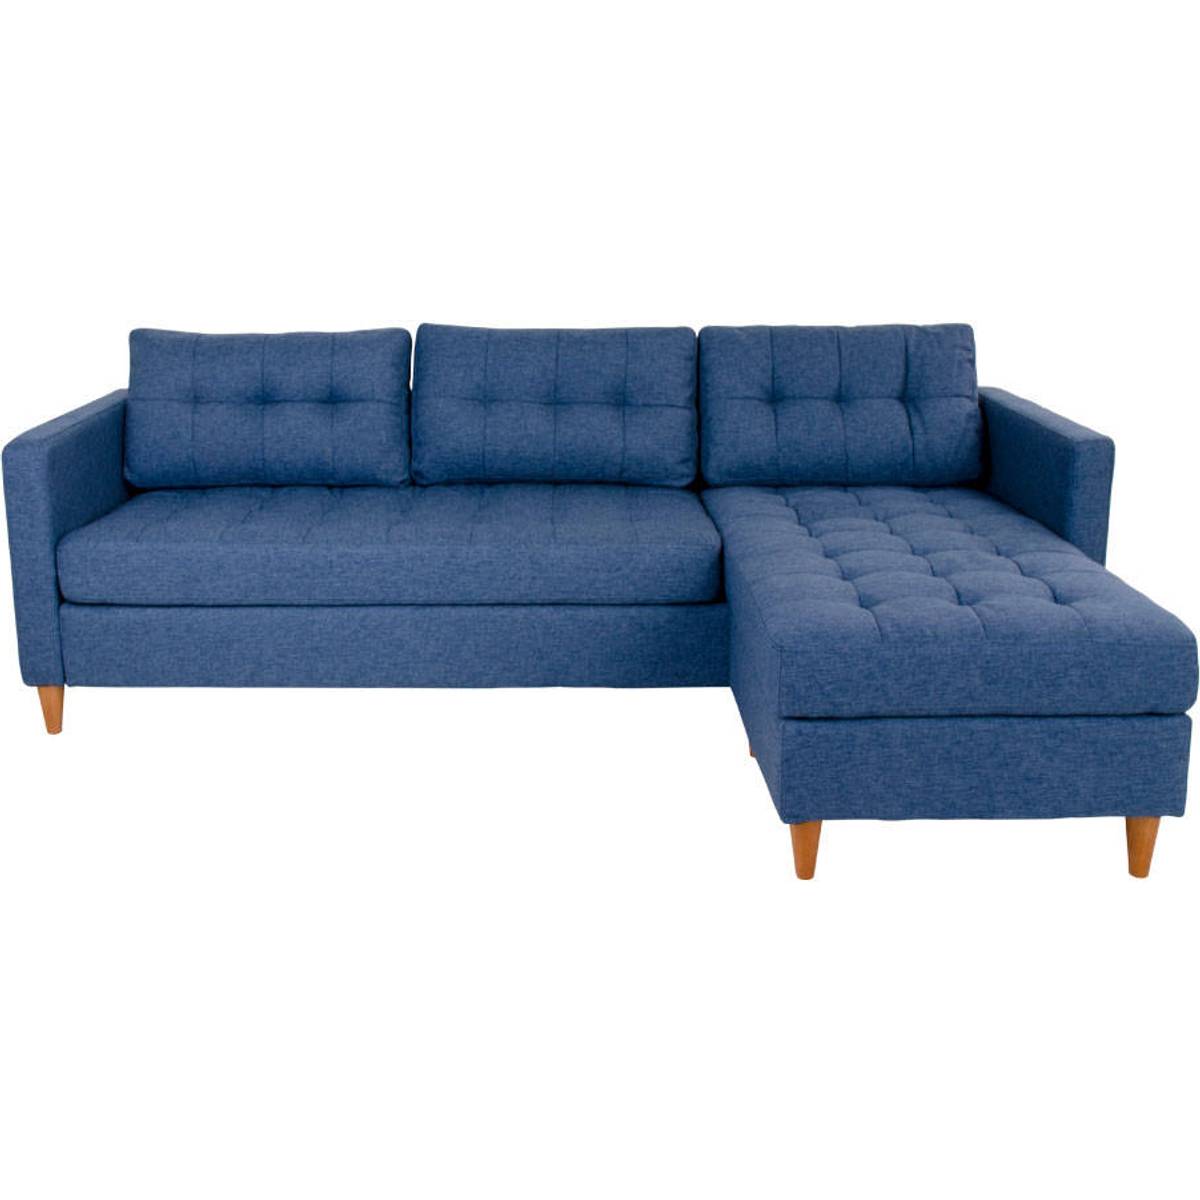 Chaiselong sofa • Find den billigste pris hos PriceRunner nu »